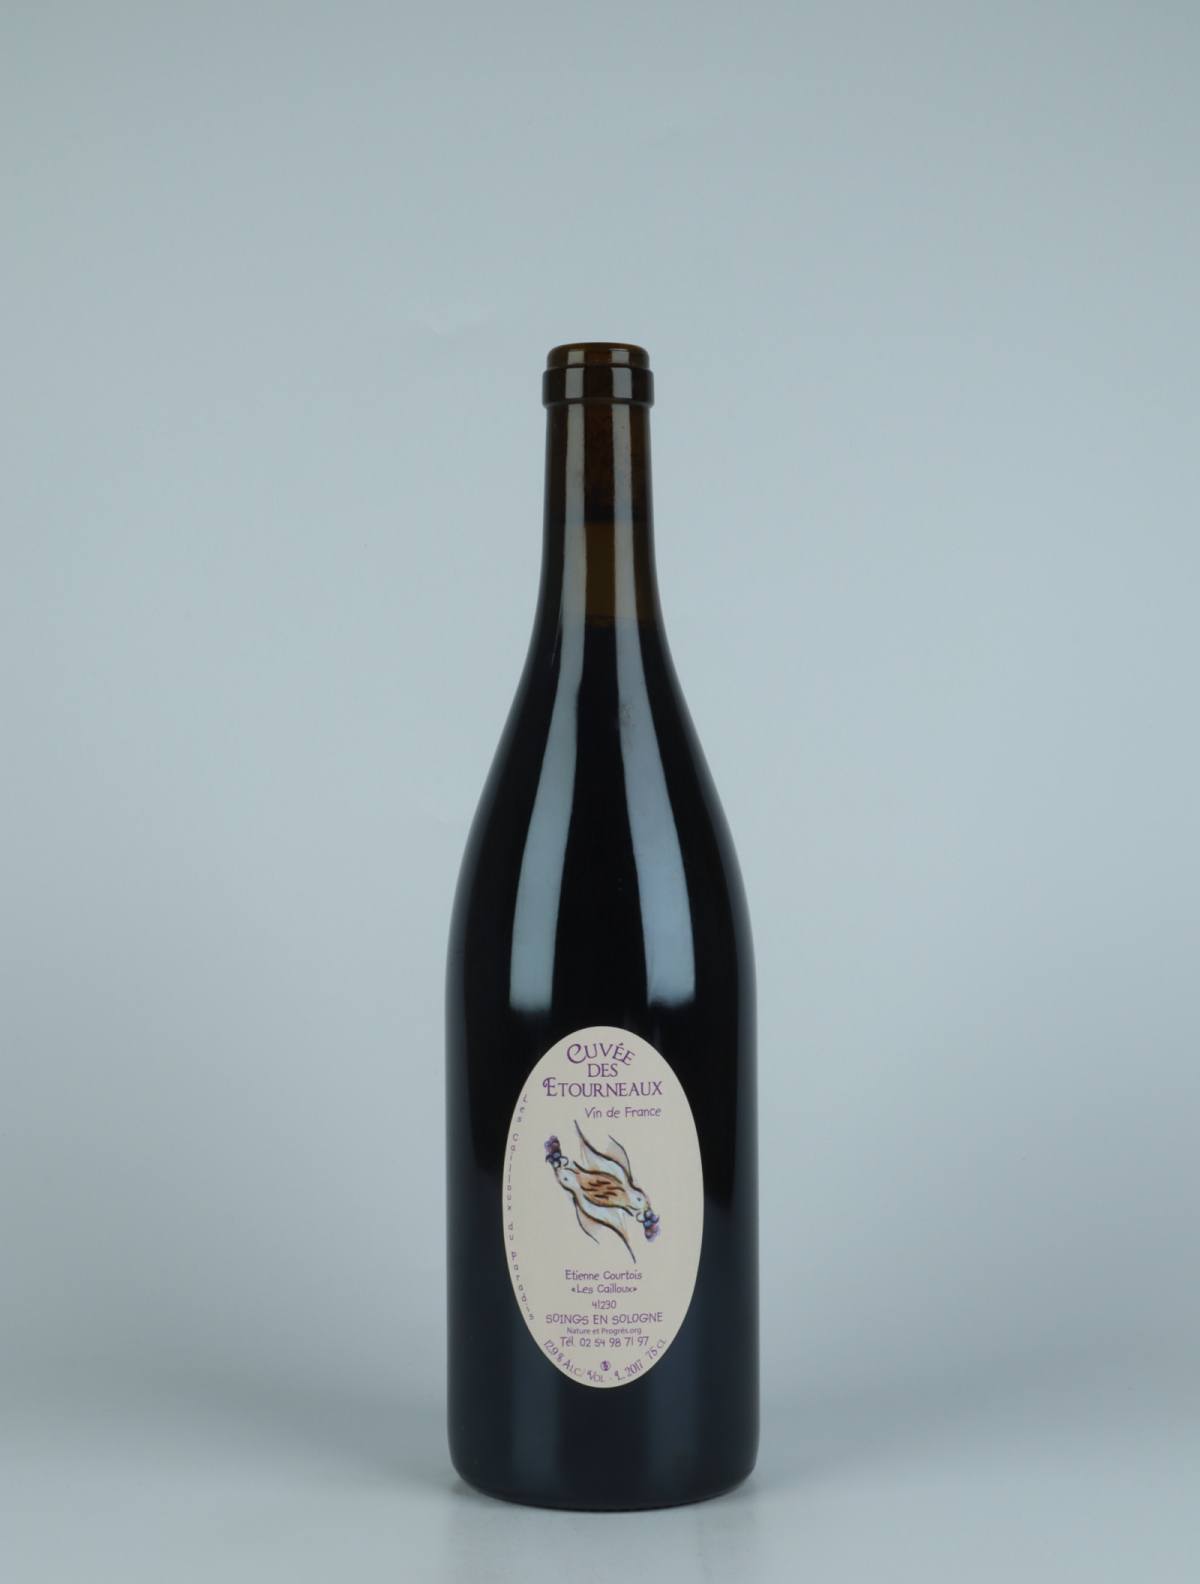 A bottle 2017 Cuvée des Etourneaux Red wine from Etienne Courtois, Loire in France